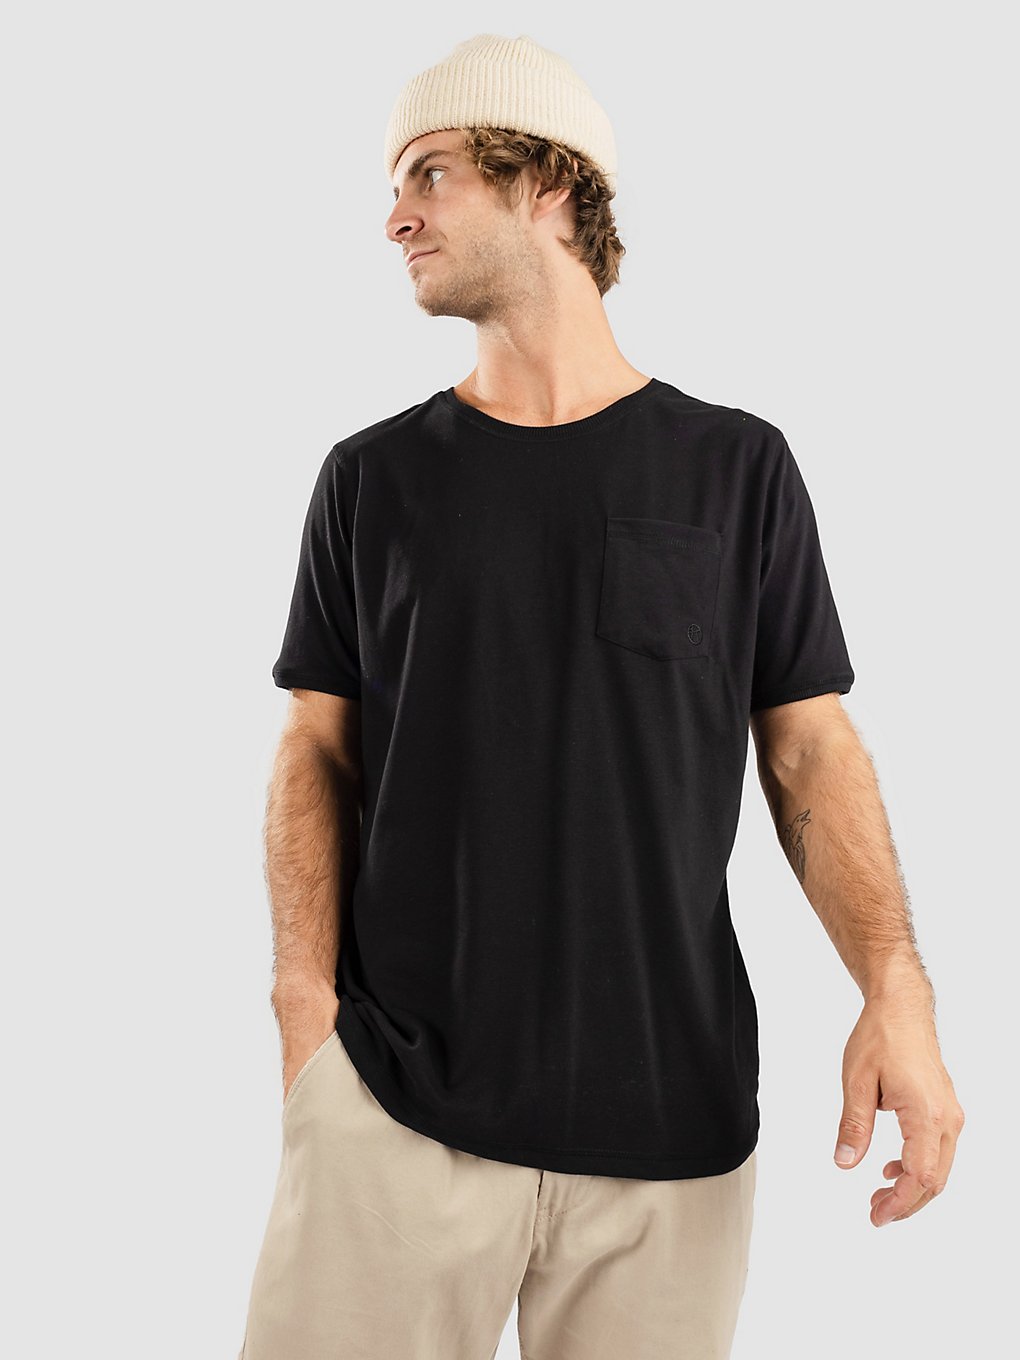 Kazane Moss T-Shirt black kaufen